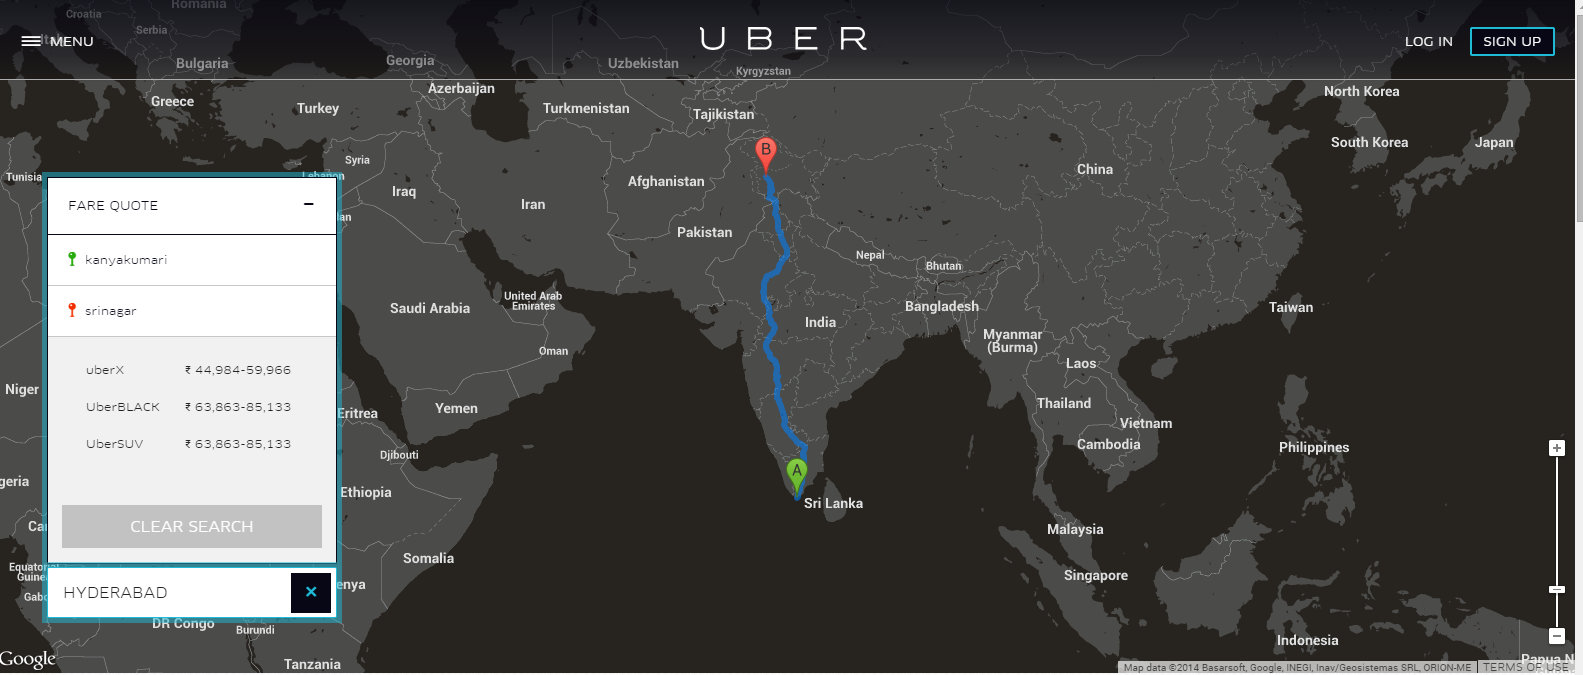 Uber will charge just Rs 44,984/- from Srinagr to Kanyakumari